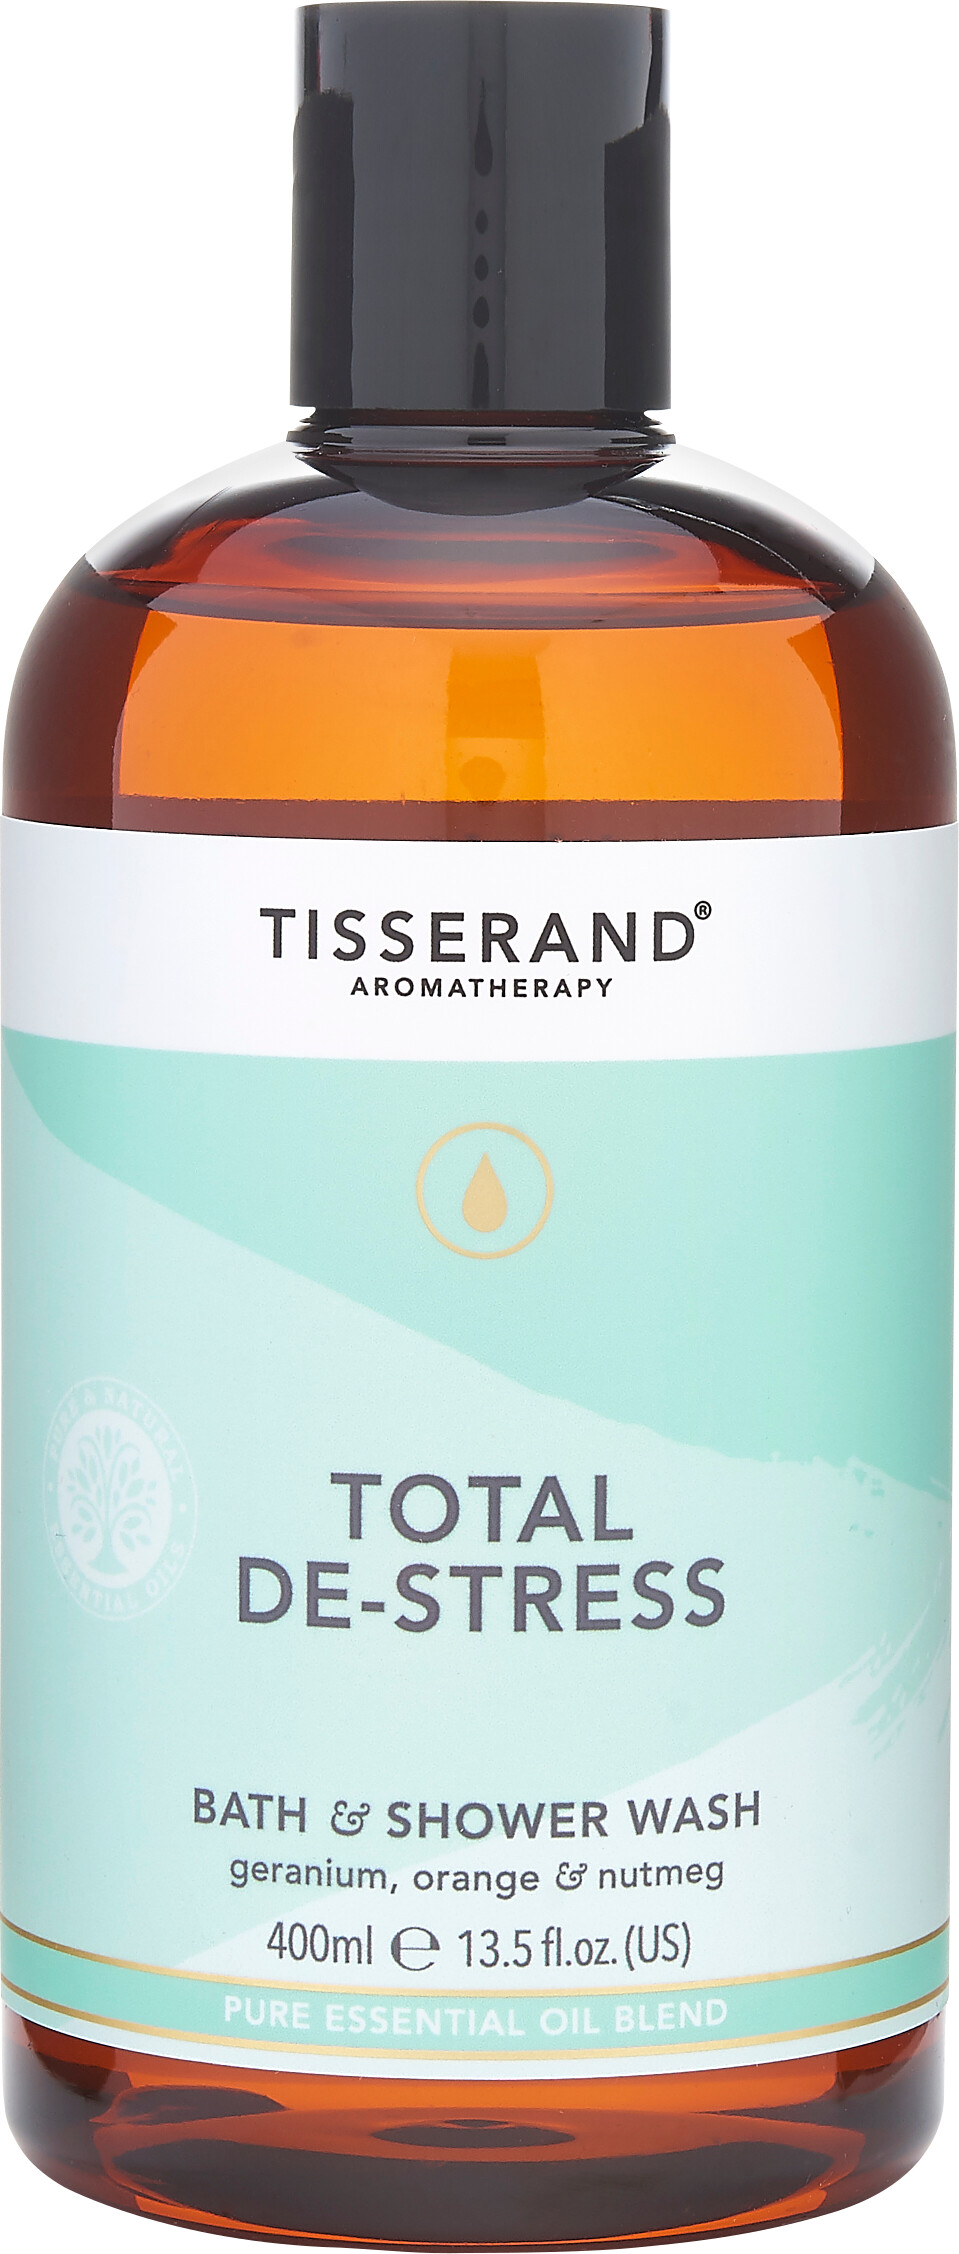 Tisserand Aromatherapy Total De-Stress Bath & Shower Wash 400ml